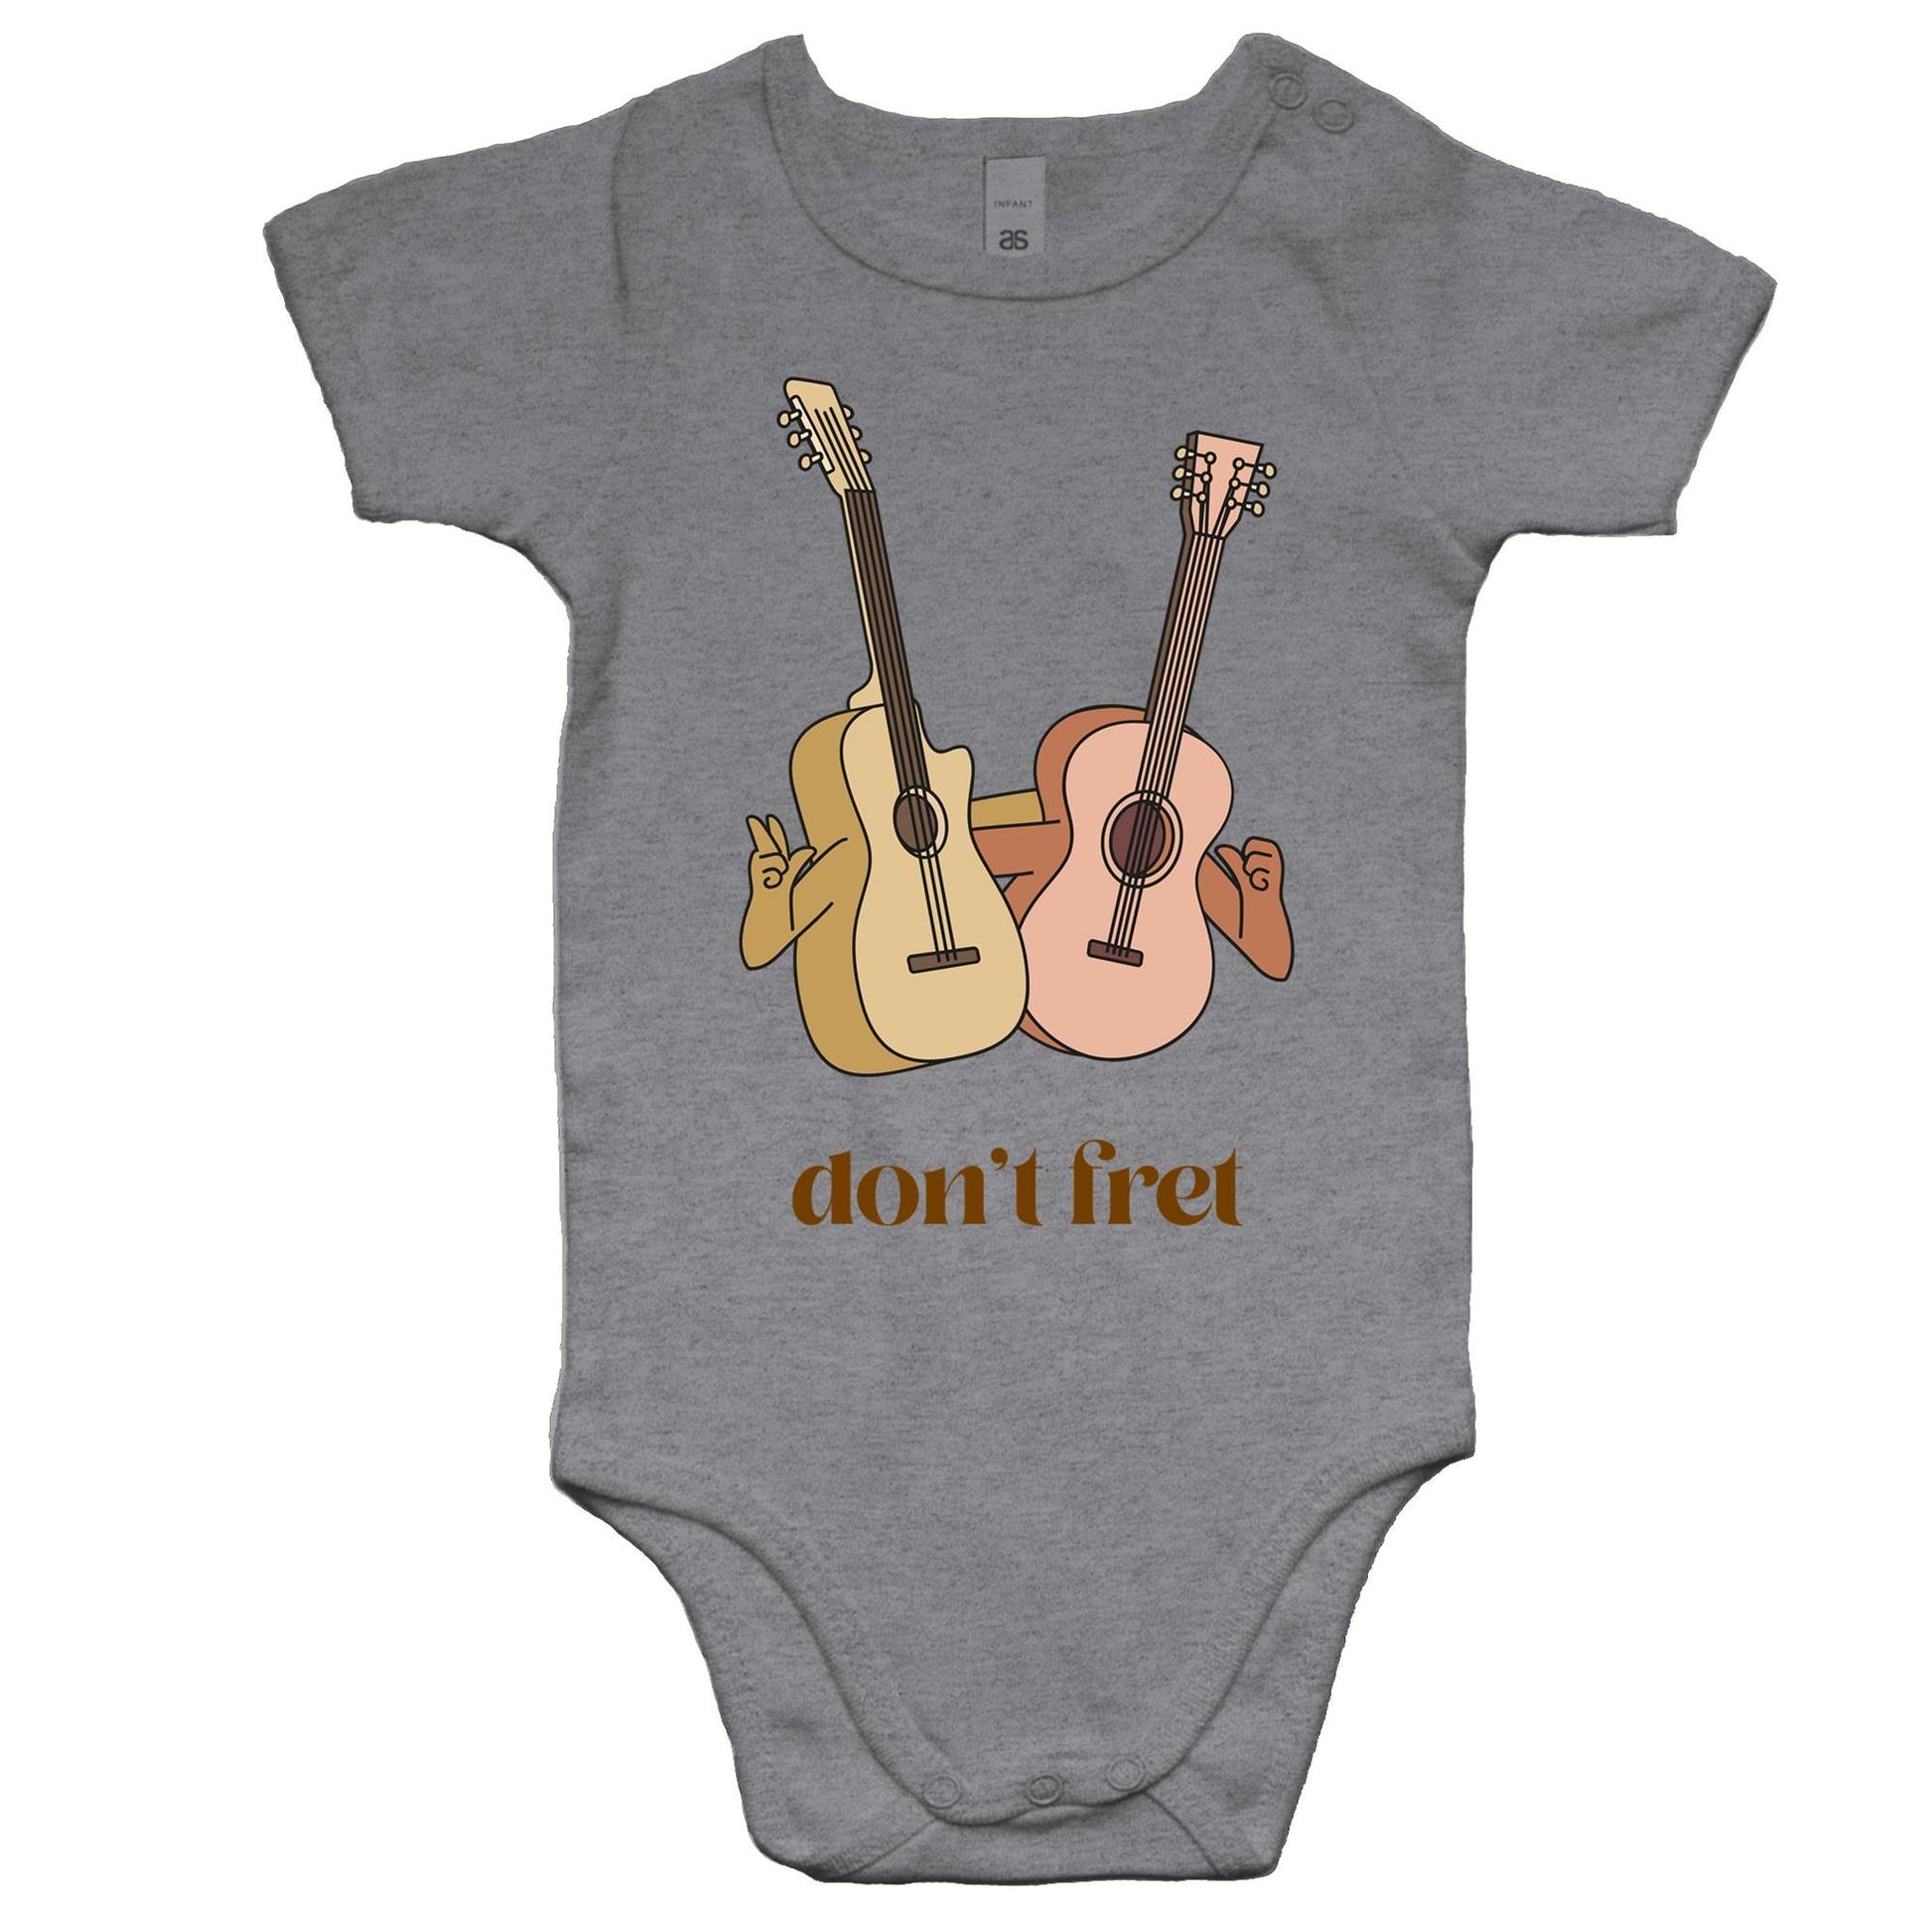 Don't Fret - Baby Bodysuit Grey Marle Baby Bodysuit Music